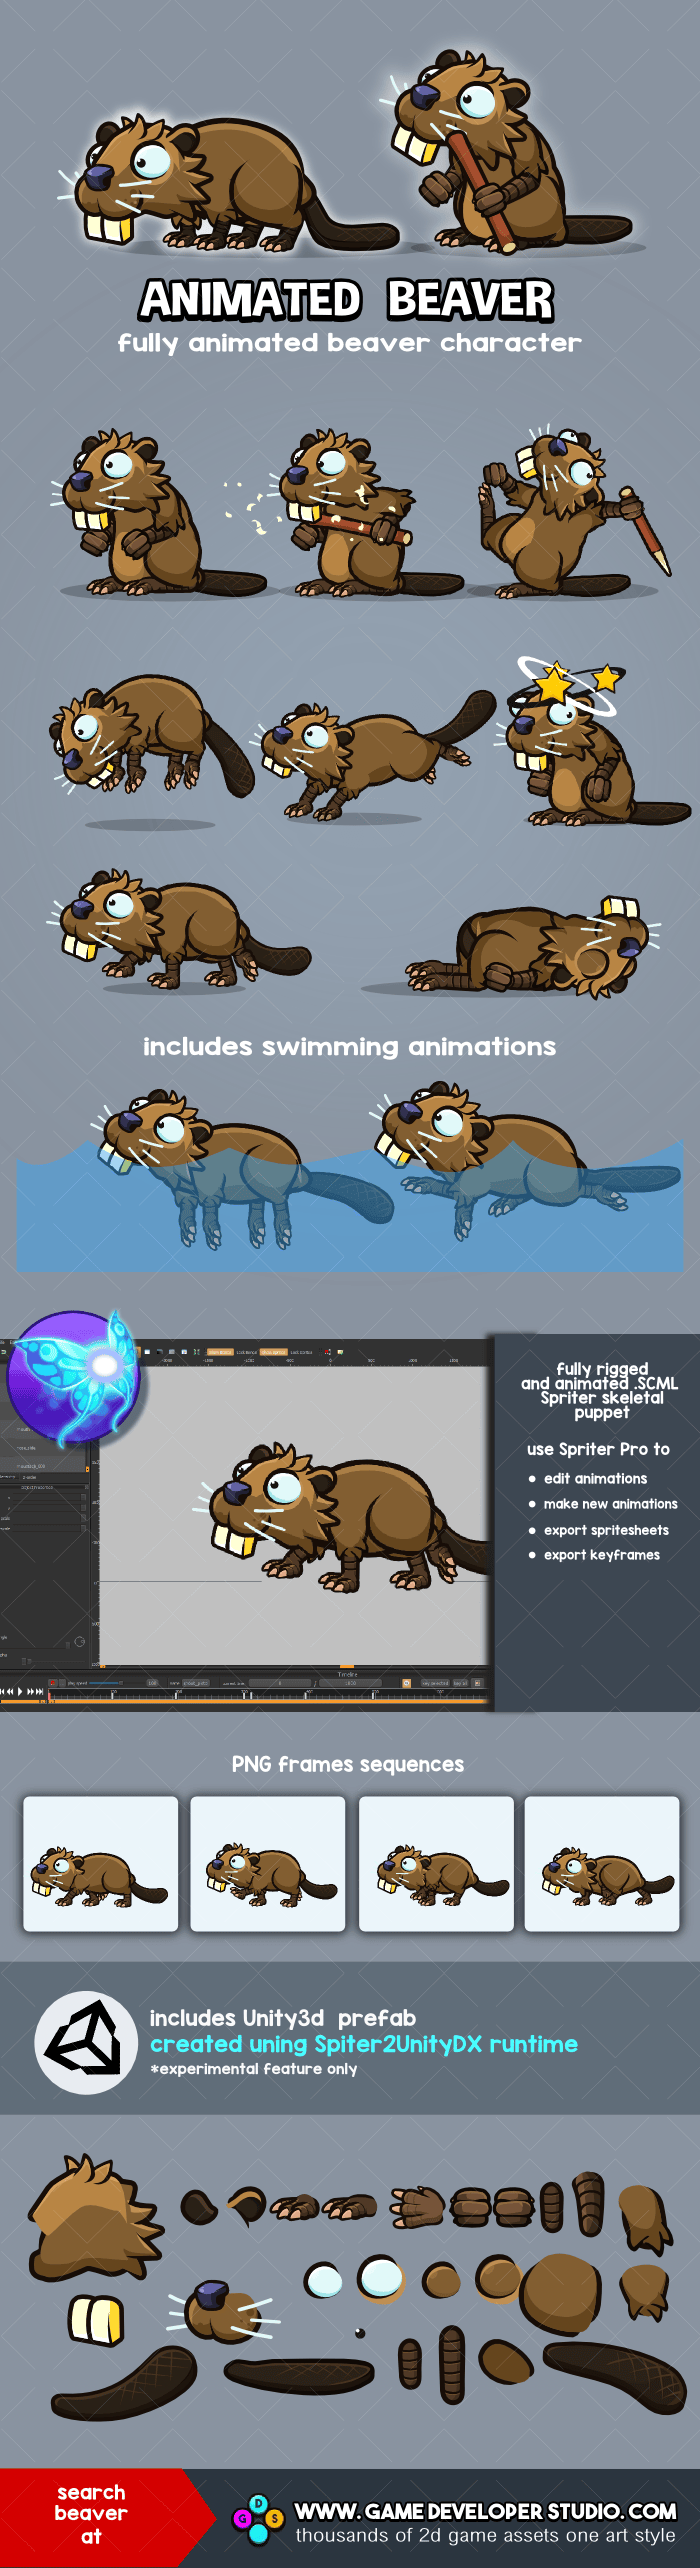 Animated beaver game sprite